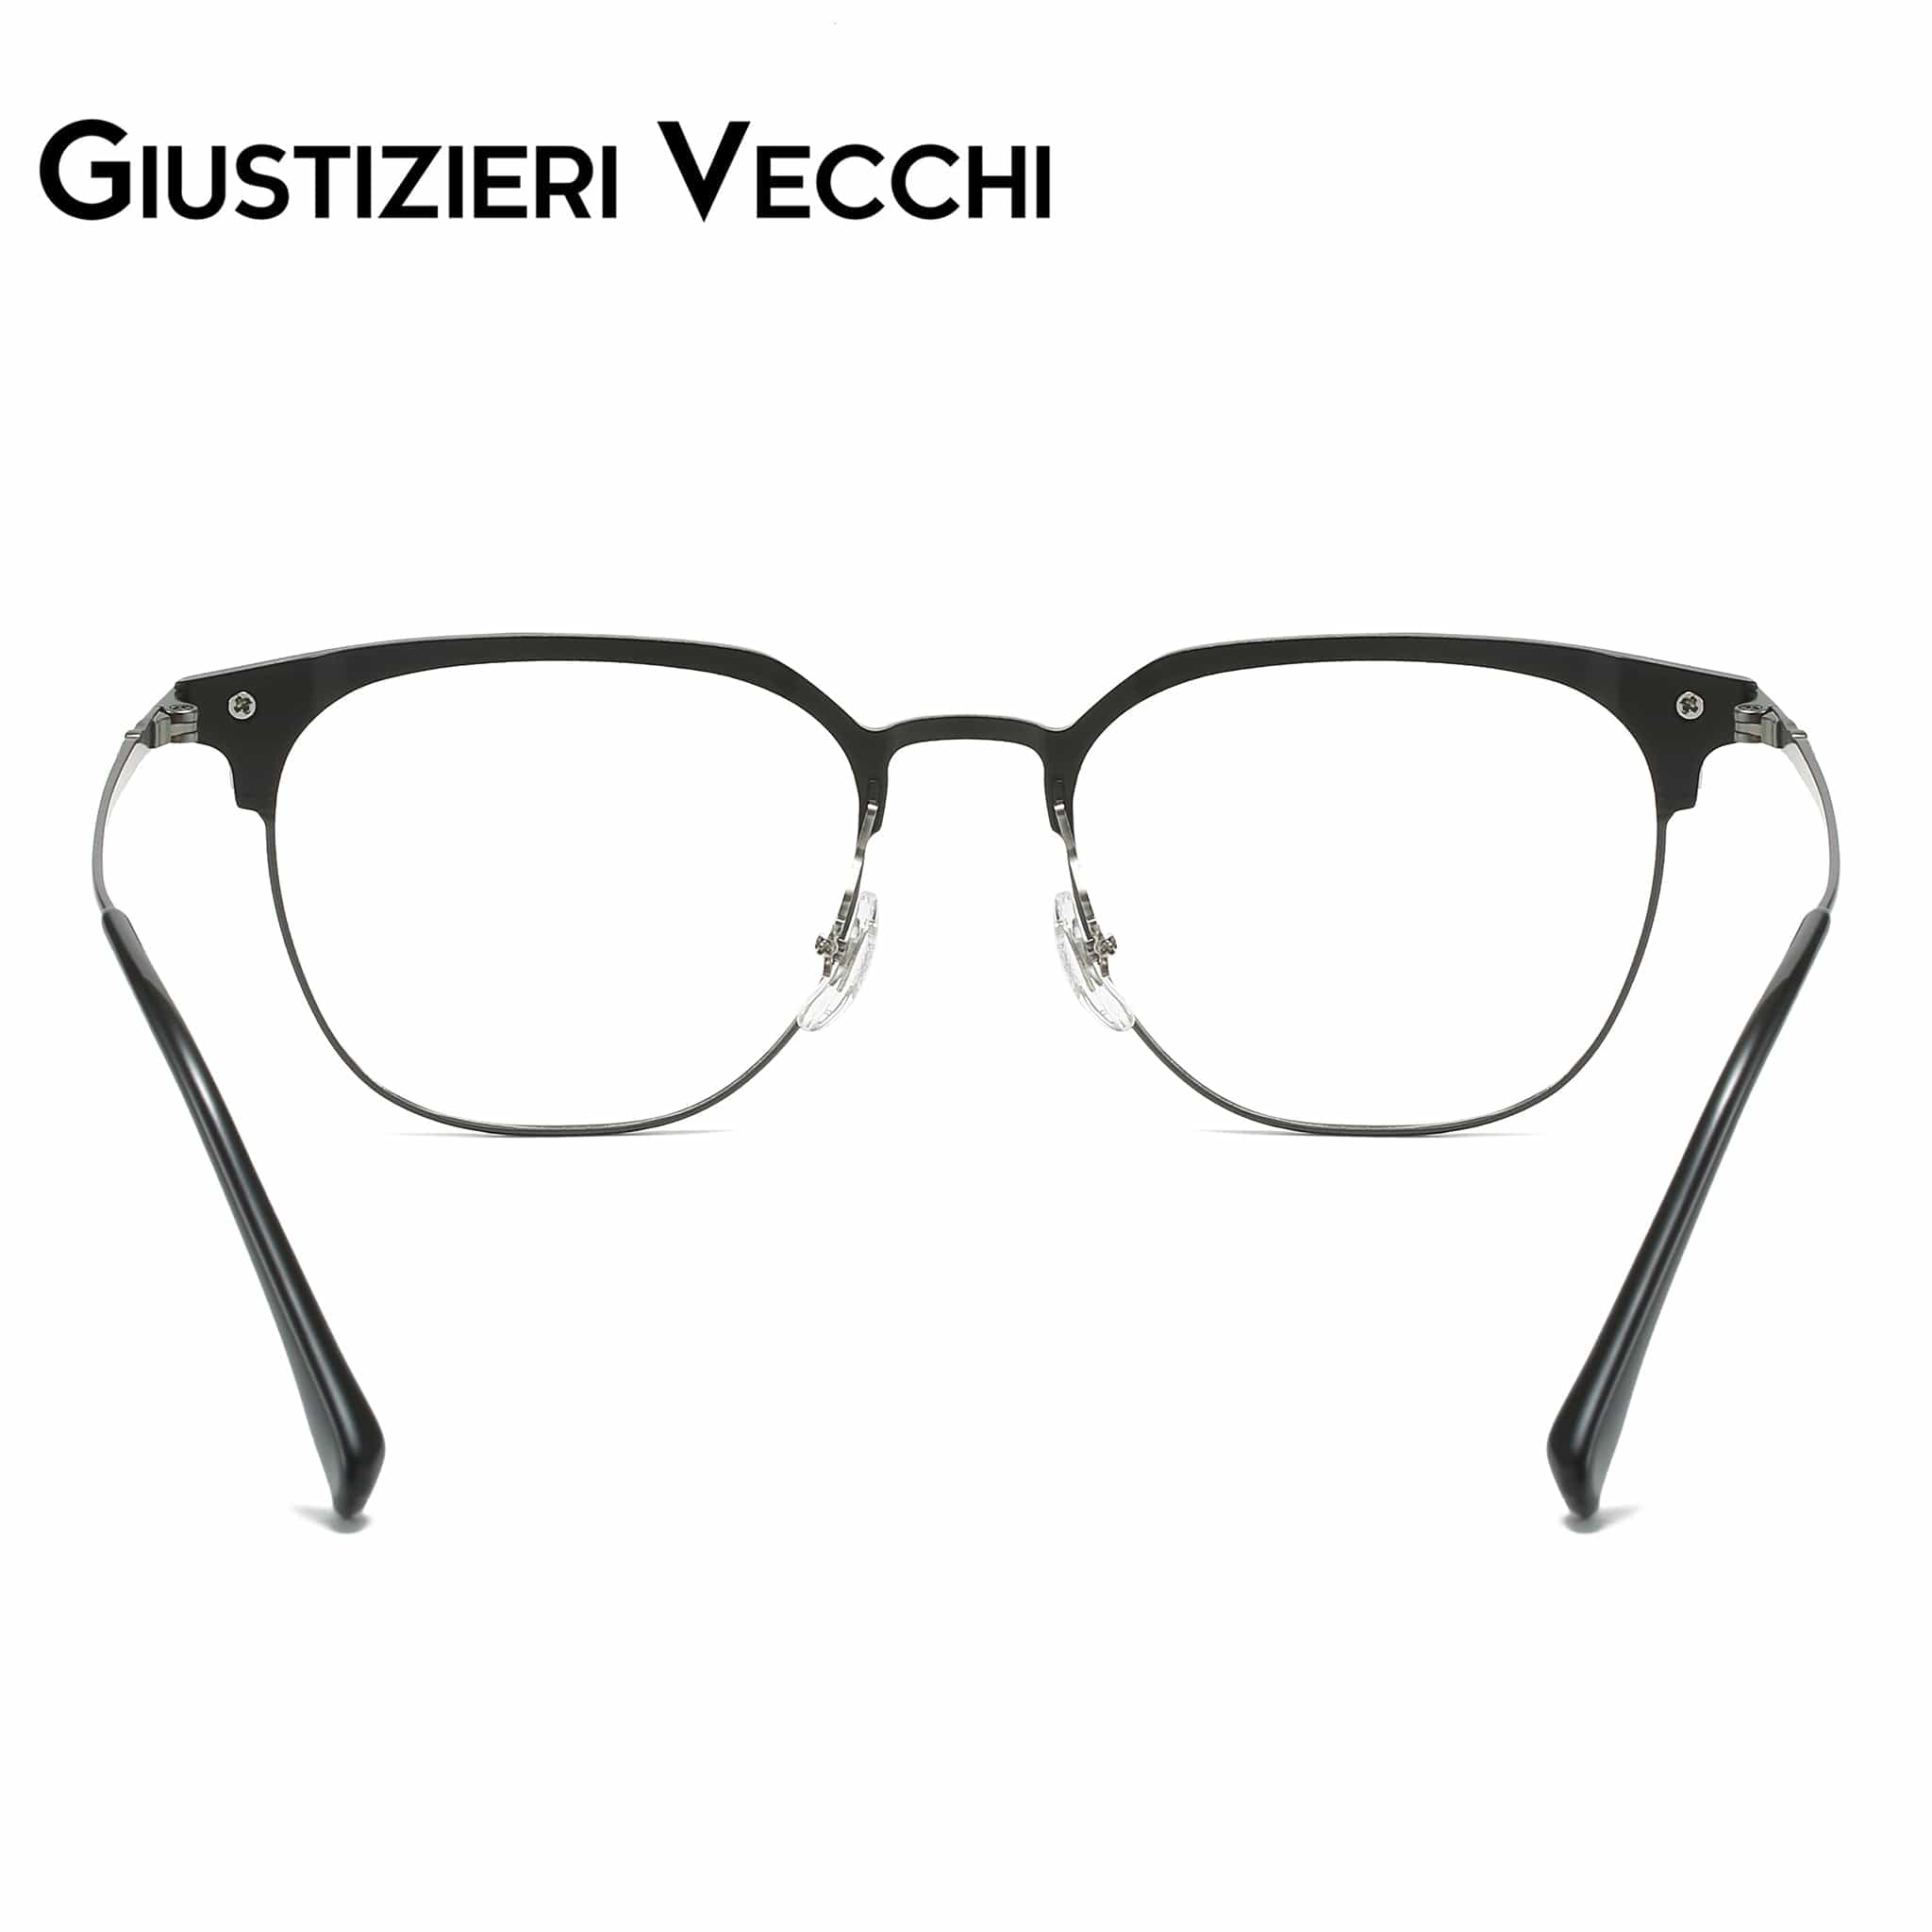 GIUSTIZIERI VECCHI Eyeglasses MindHaze Uno